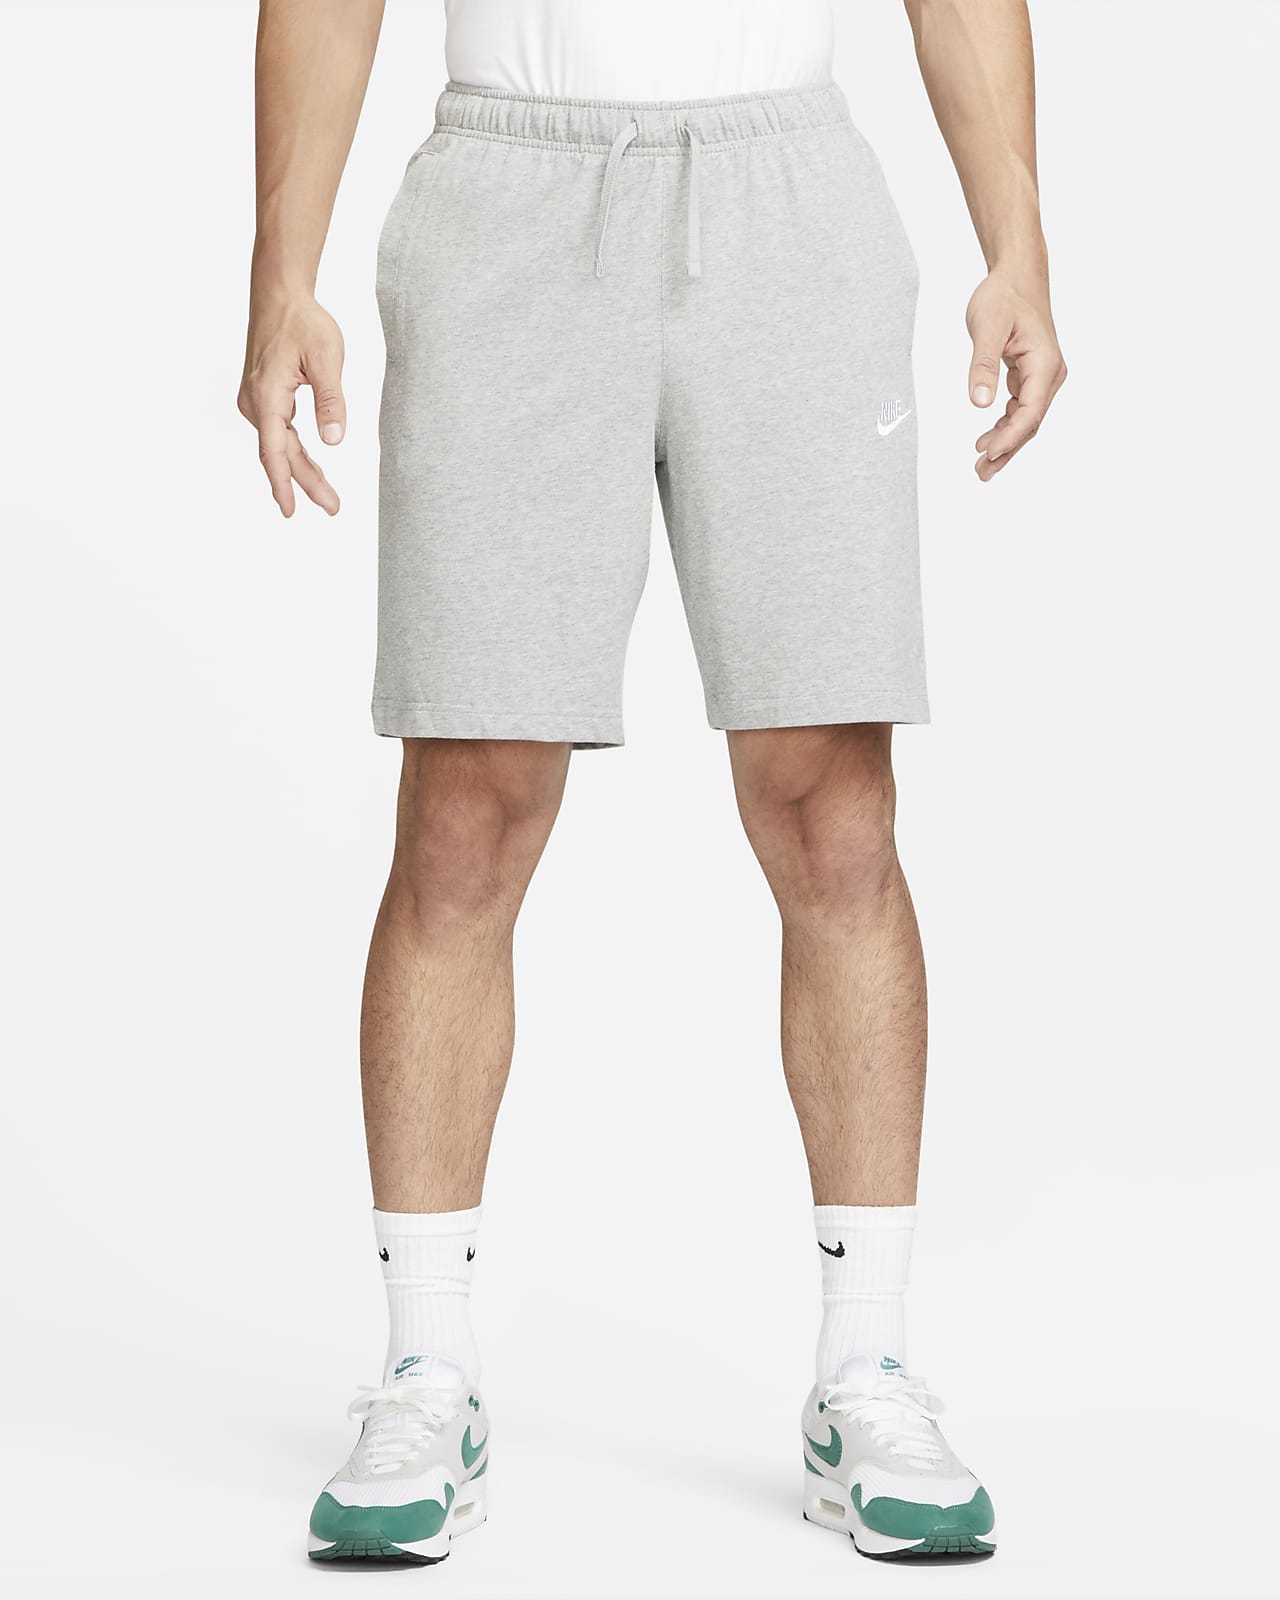 Shorts para hombre Nike Sportswear Club. Nike CL